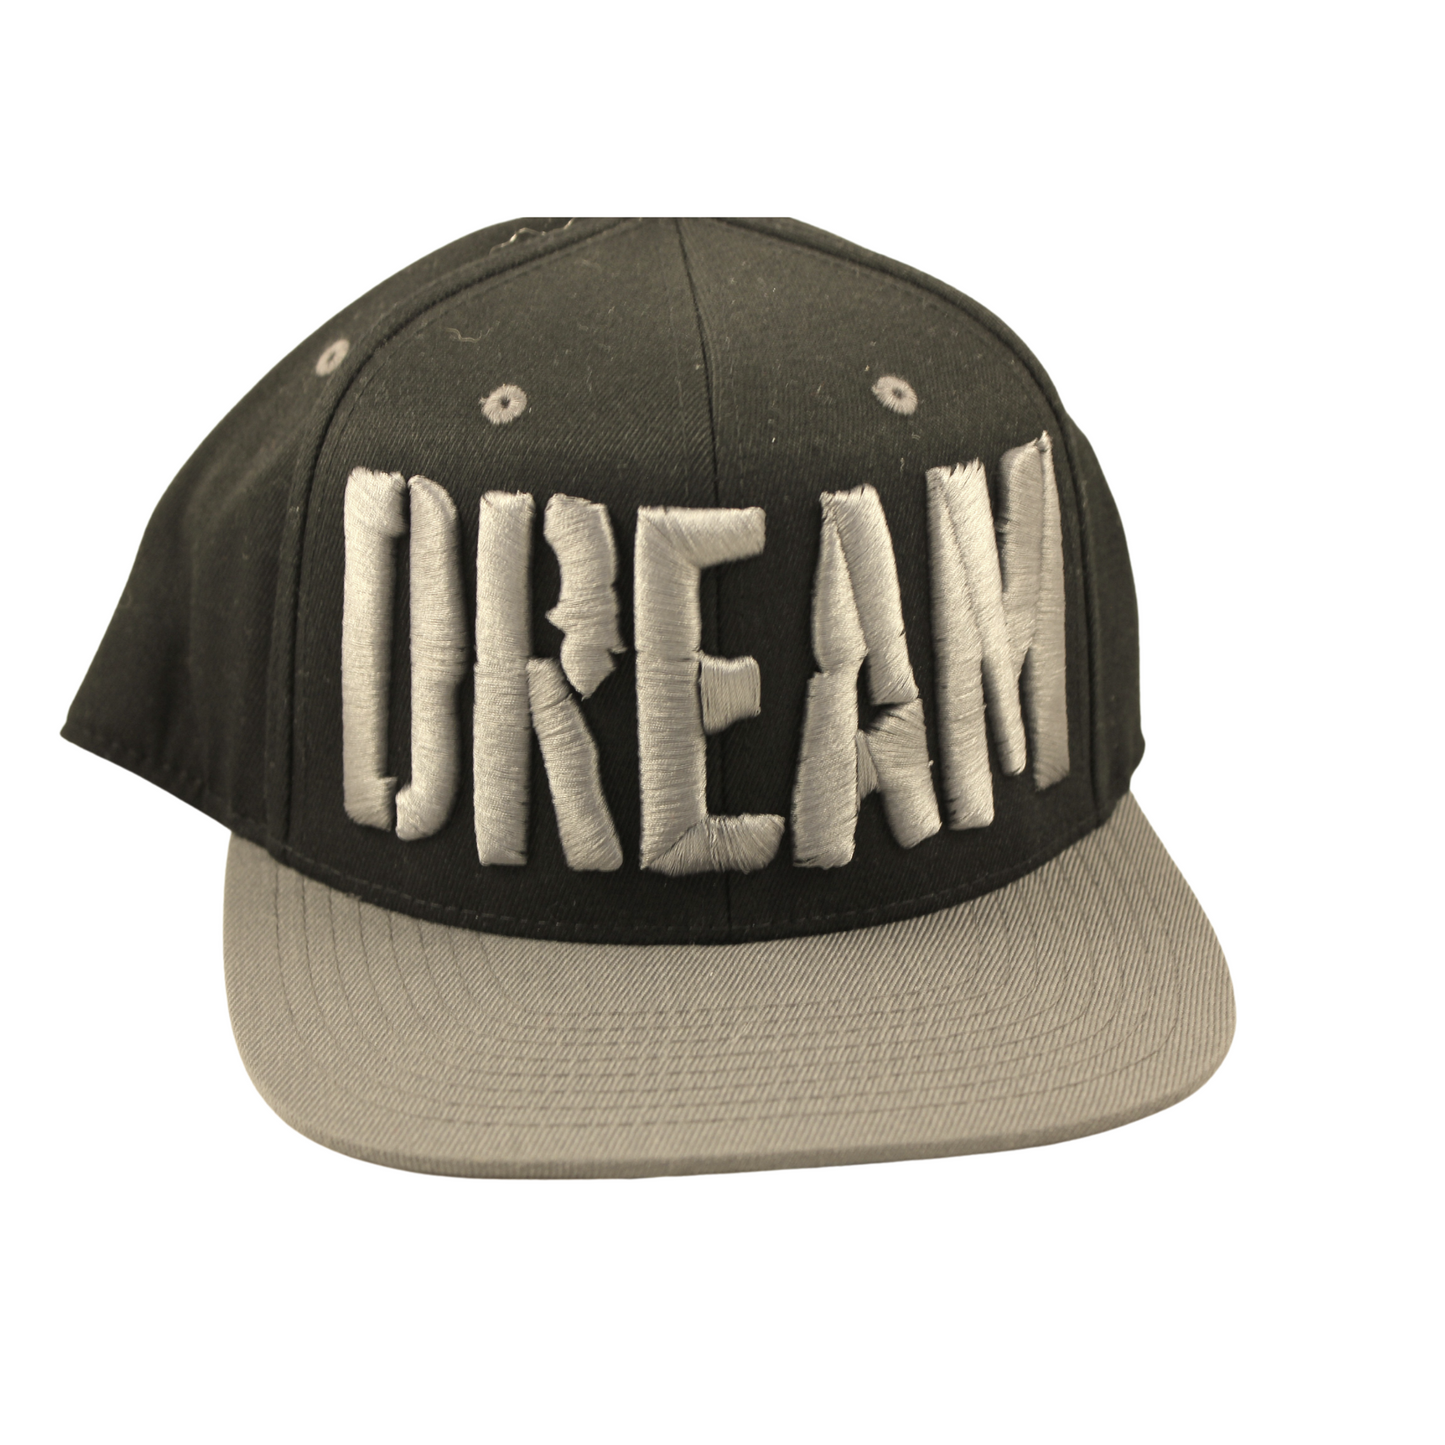 DREAM Logo Snapback Hat